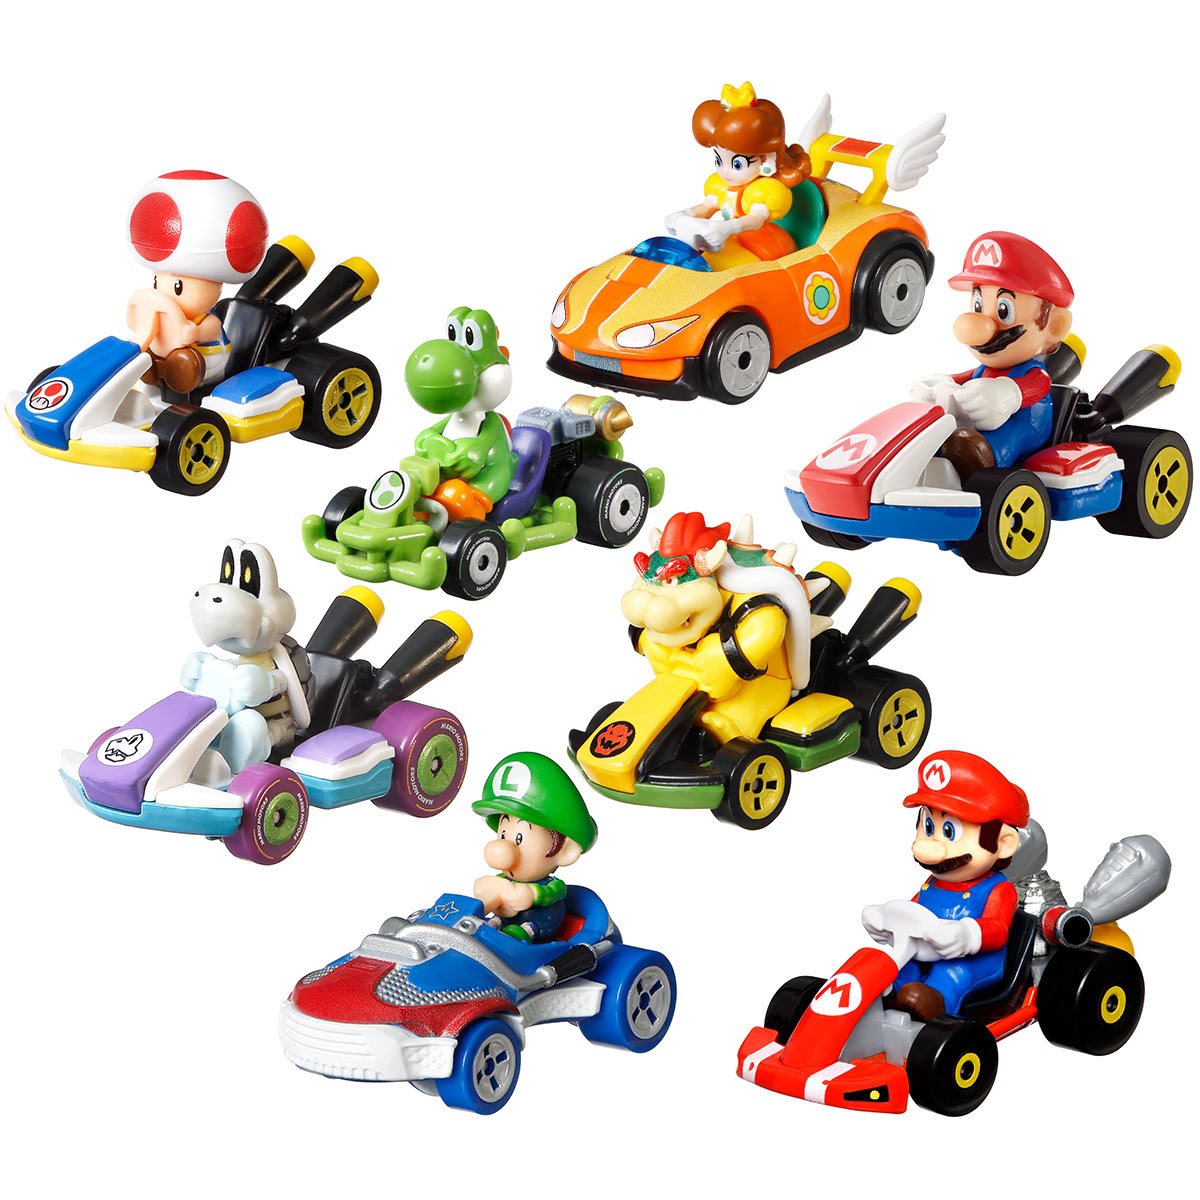 Hot Wheels Mario Kart Toy Car  Mario kart, Mario kart characters, Hot  wheels